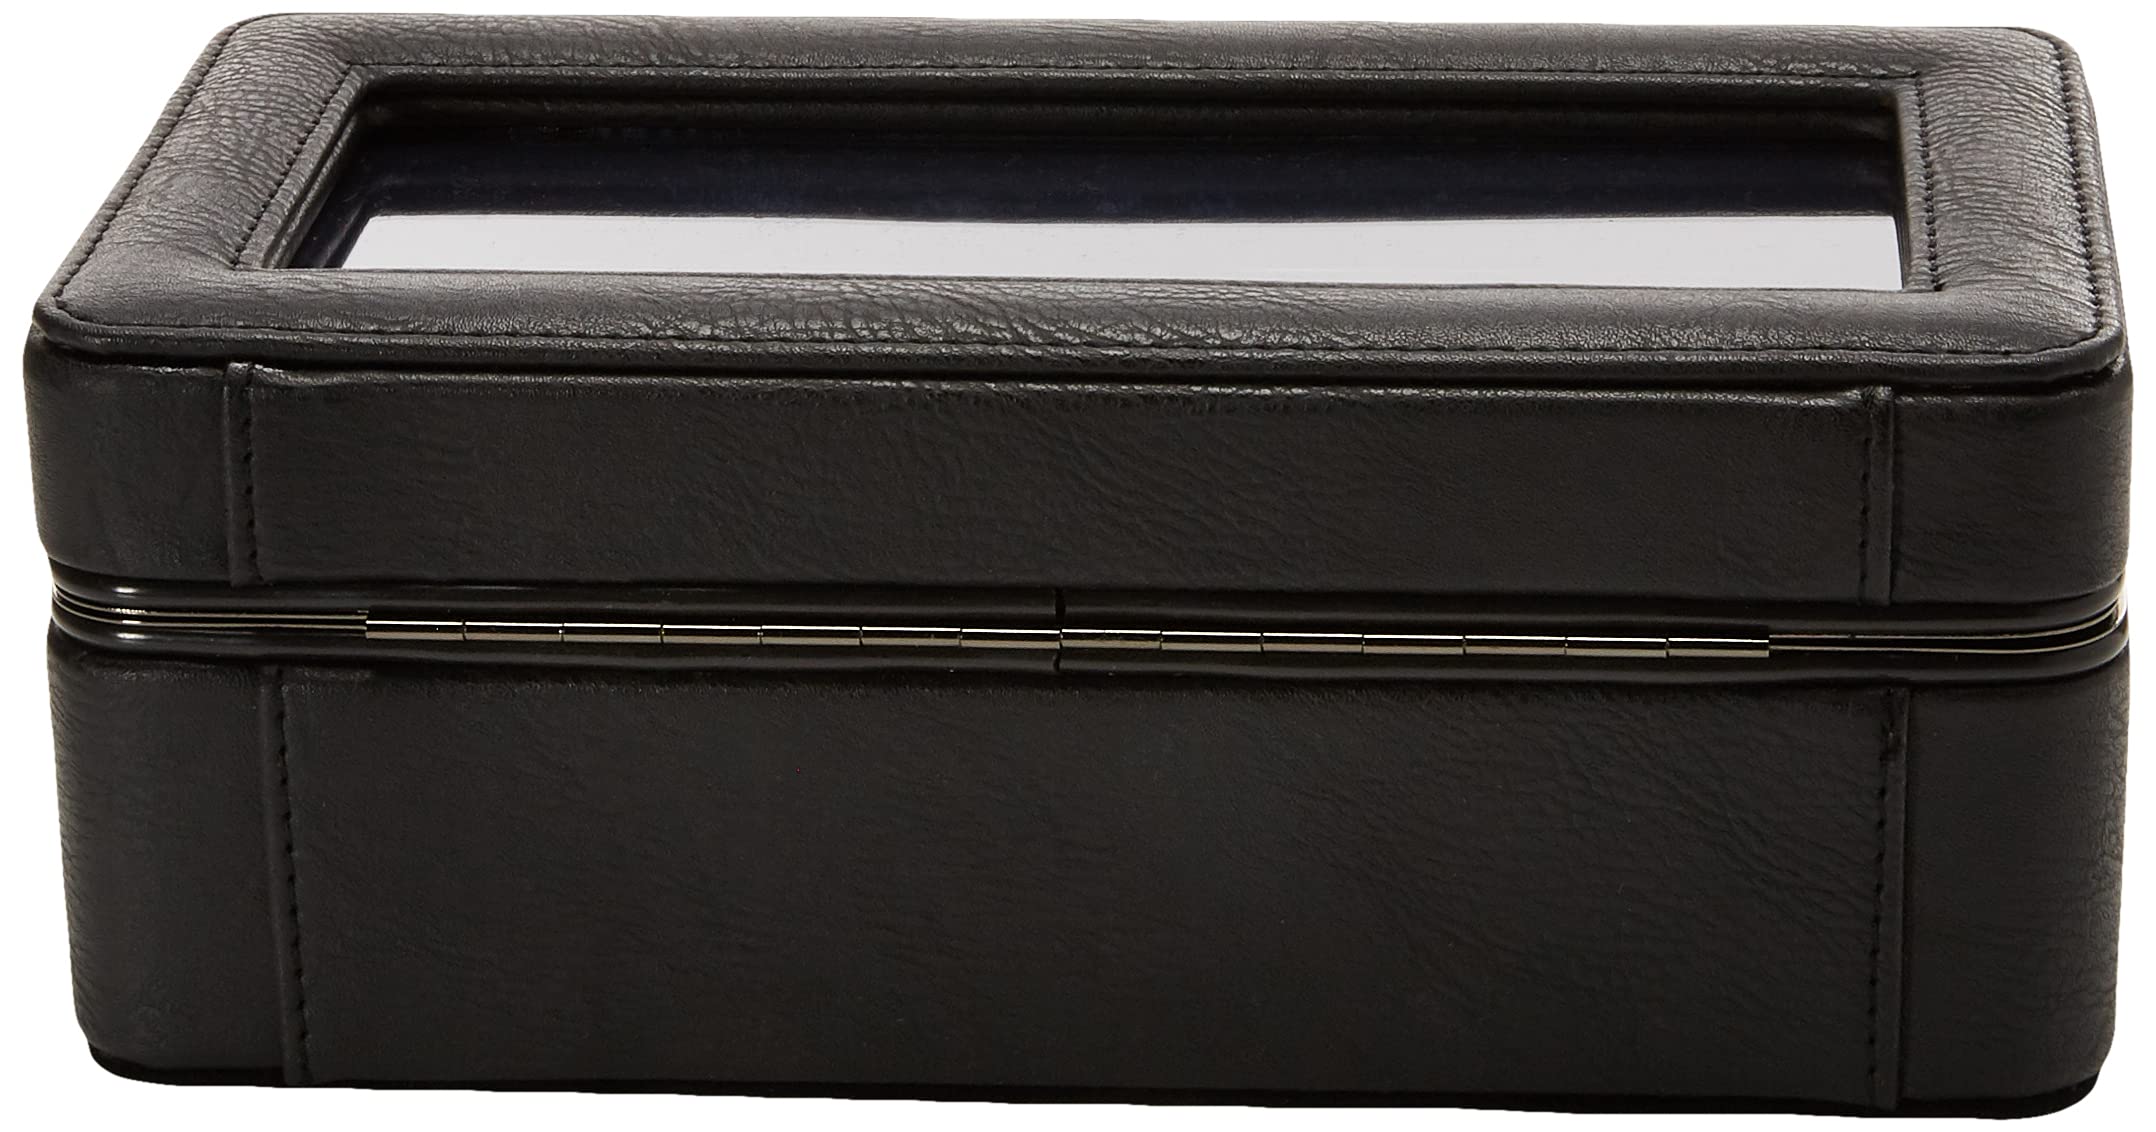 Perry Ellis Men's Leather Watch Storage Box, Black, 1-sz